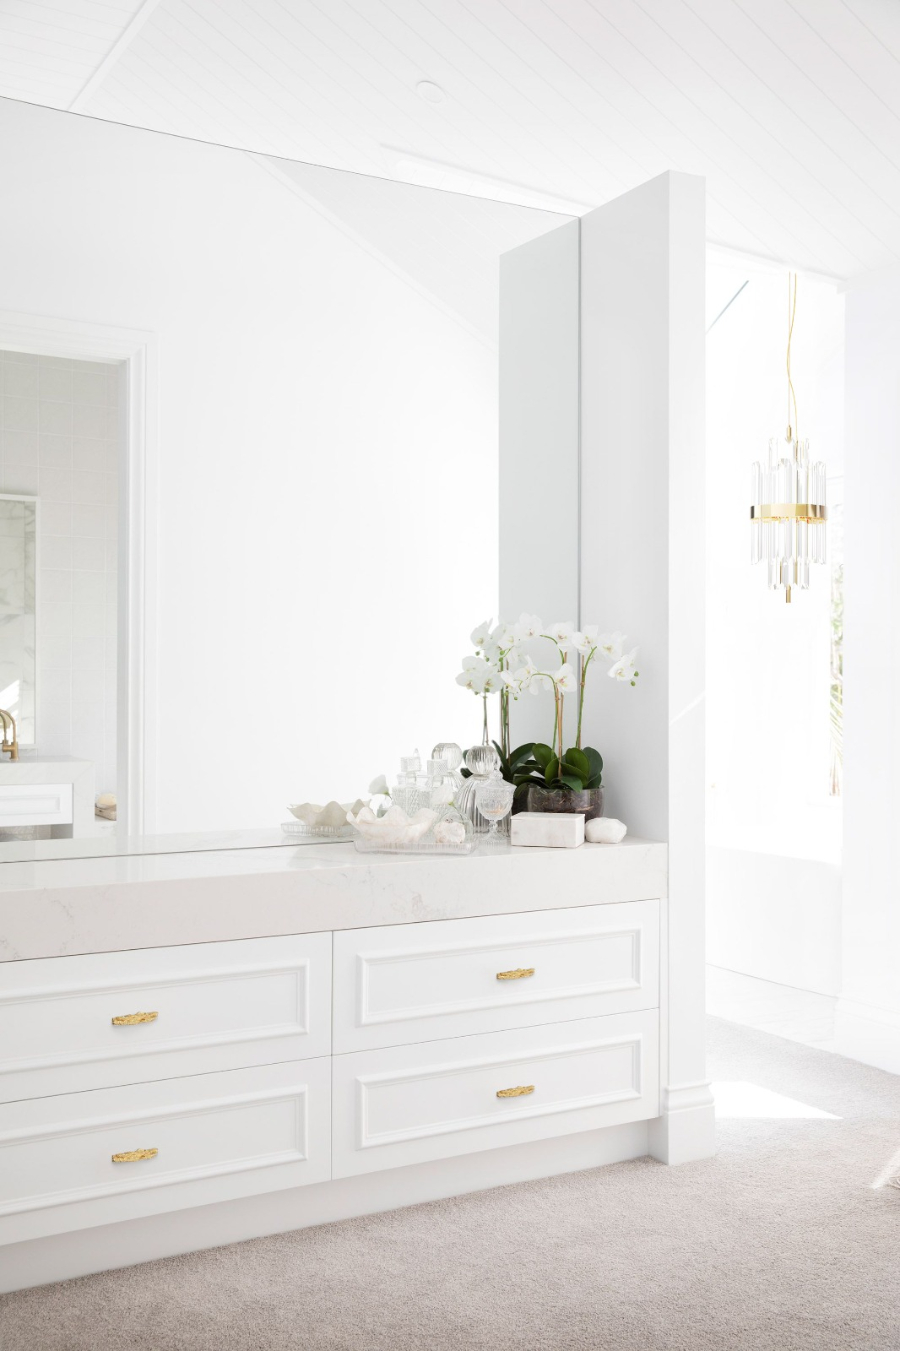 Bathroom modern interior design with white marble tones.